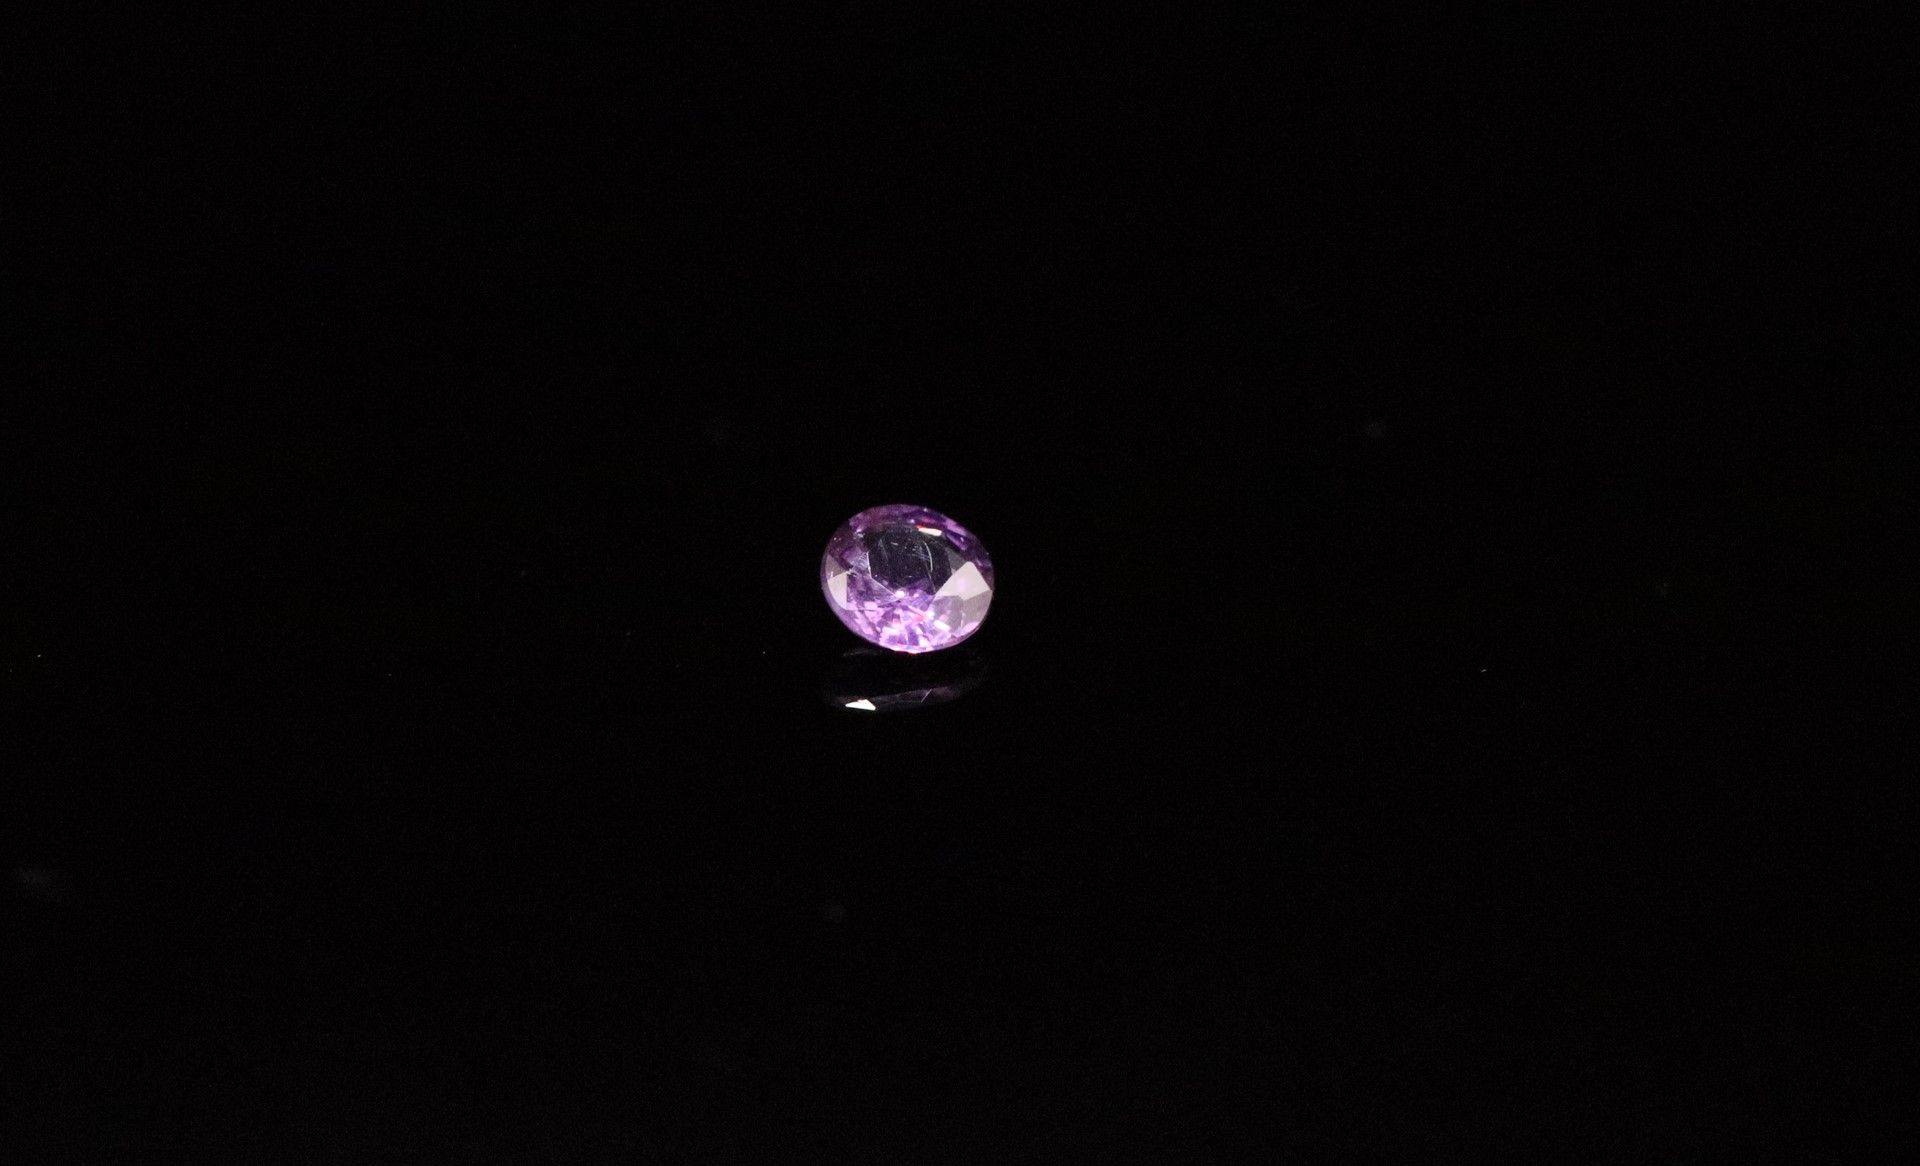 Null Round violet sapphire on paper.
Weight : 0.15 ct

Diameter: 3.2mm